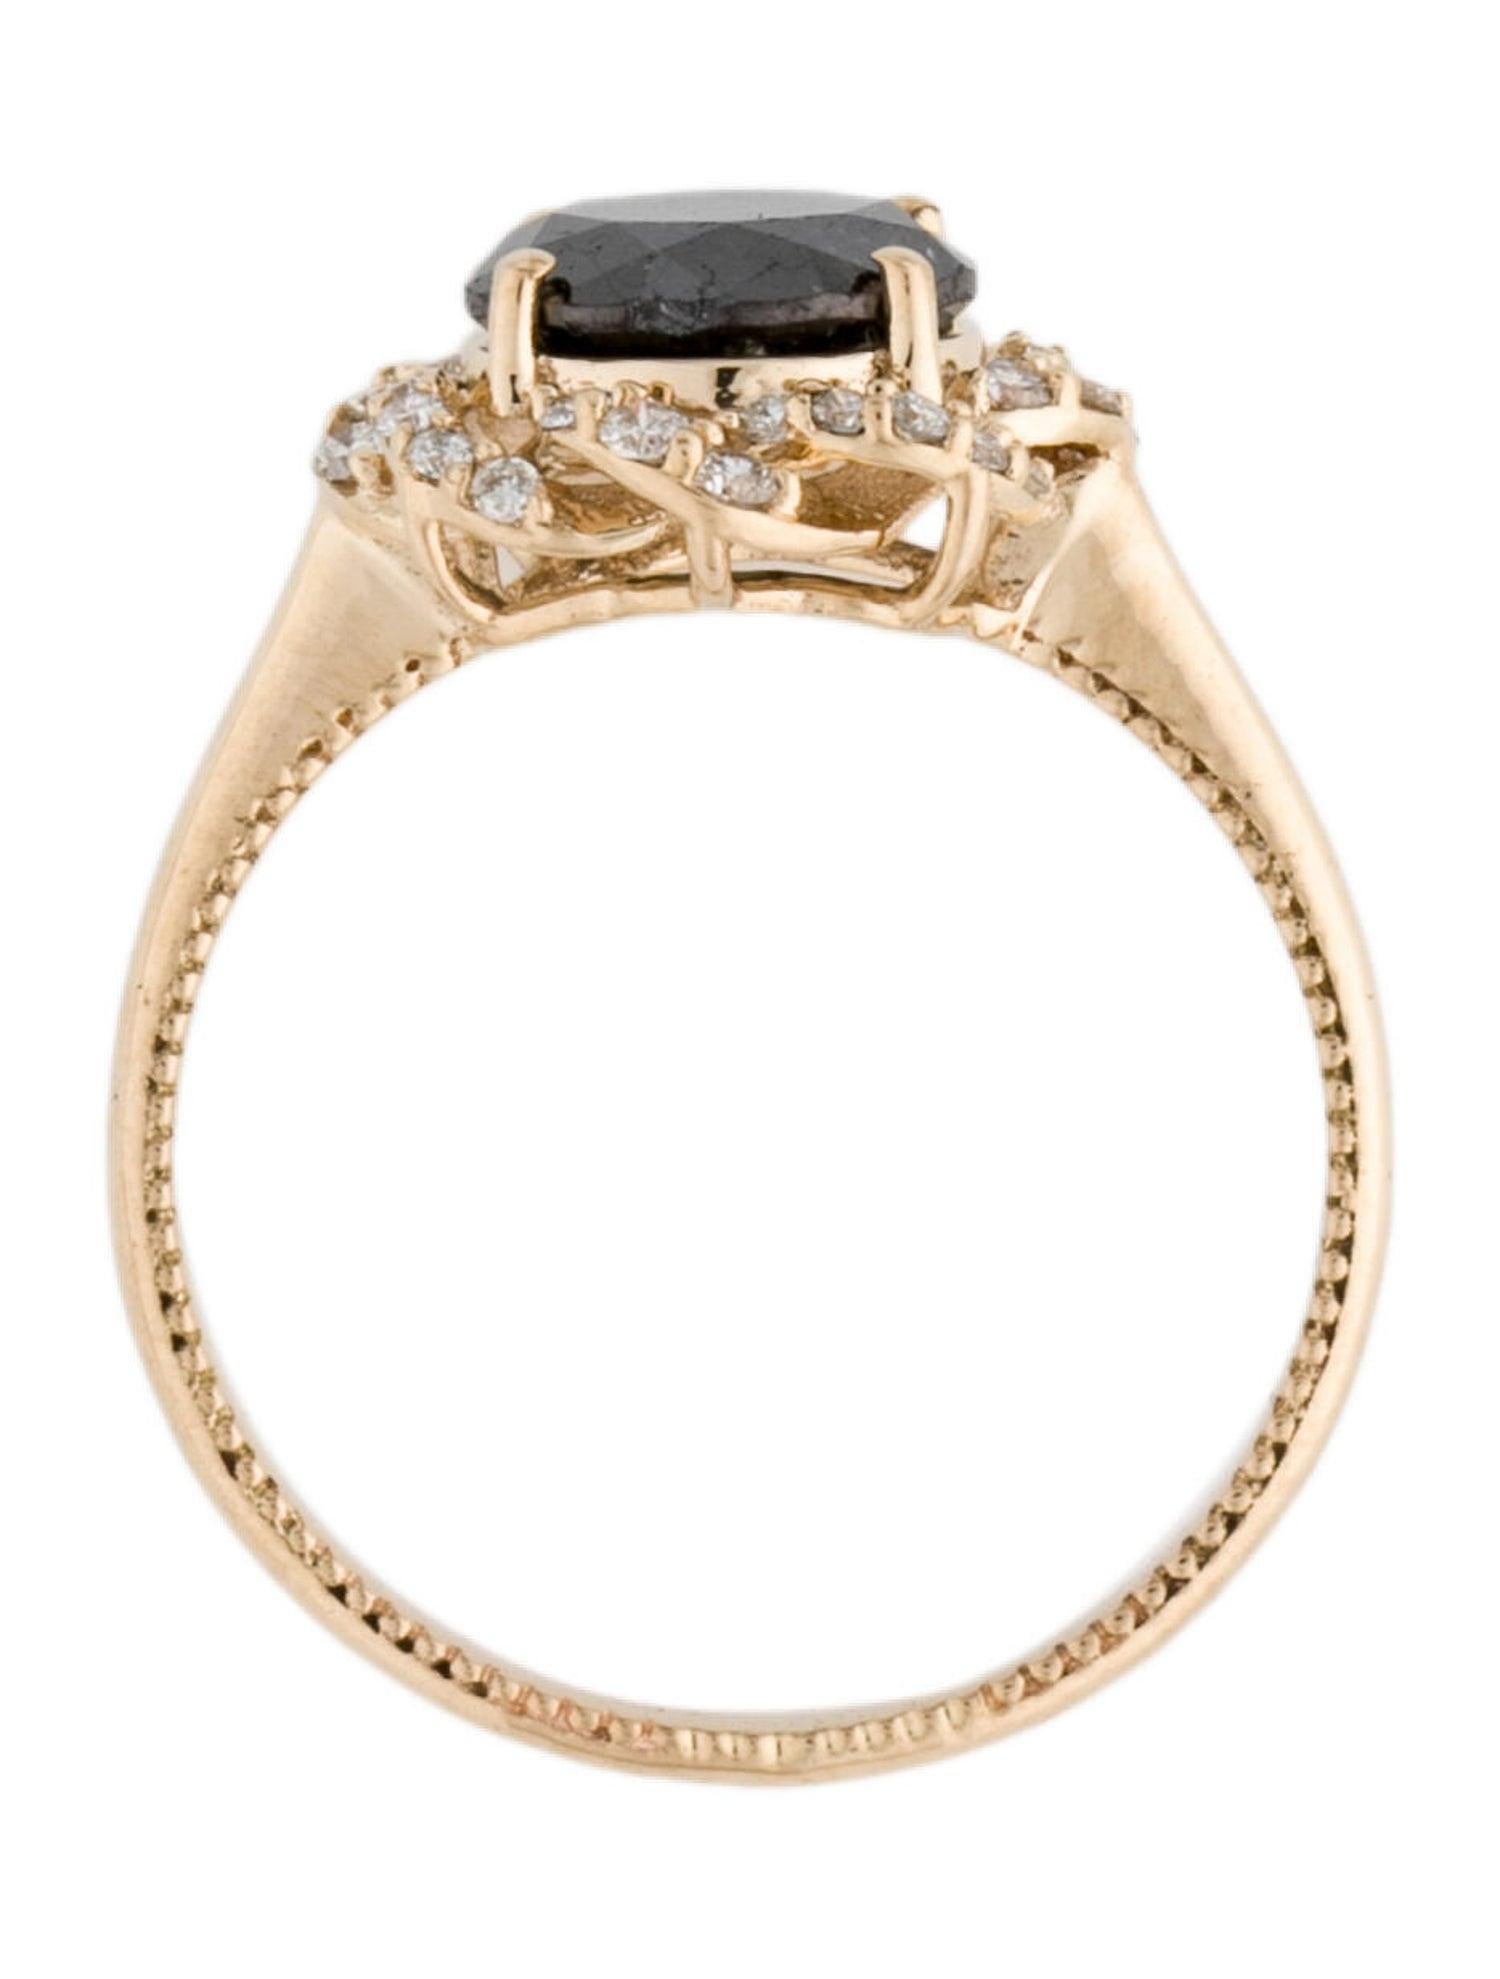 Brilliant Cut Elegant 14K Diamond Cocktail Ring, 2.09ctw, Size 6.75 - Statement Jewelry Piece For Sale